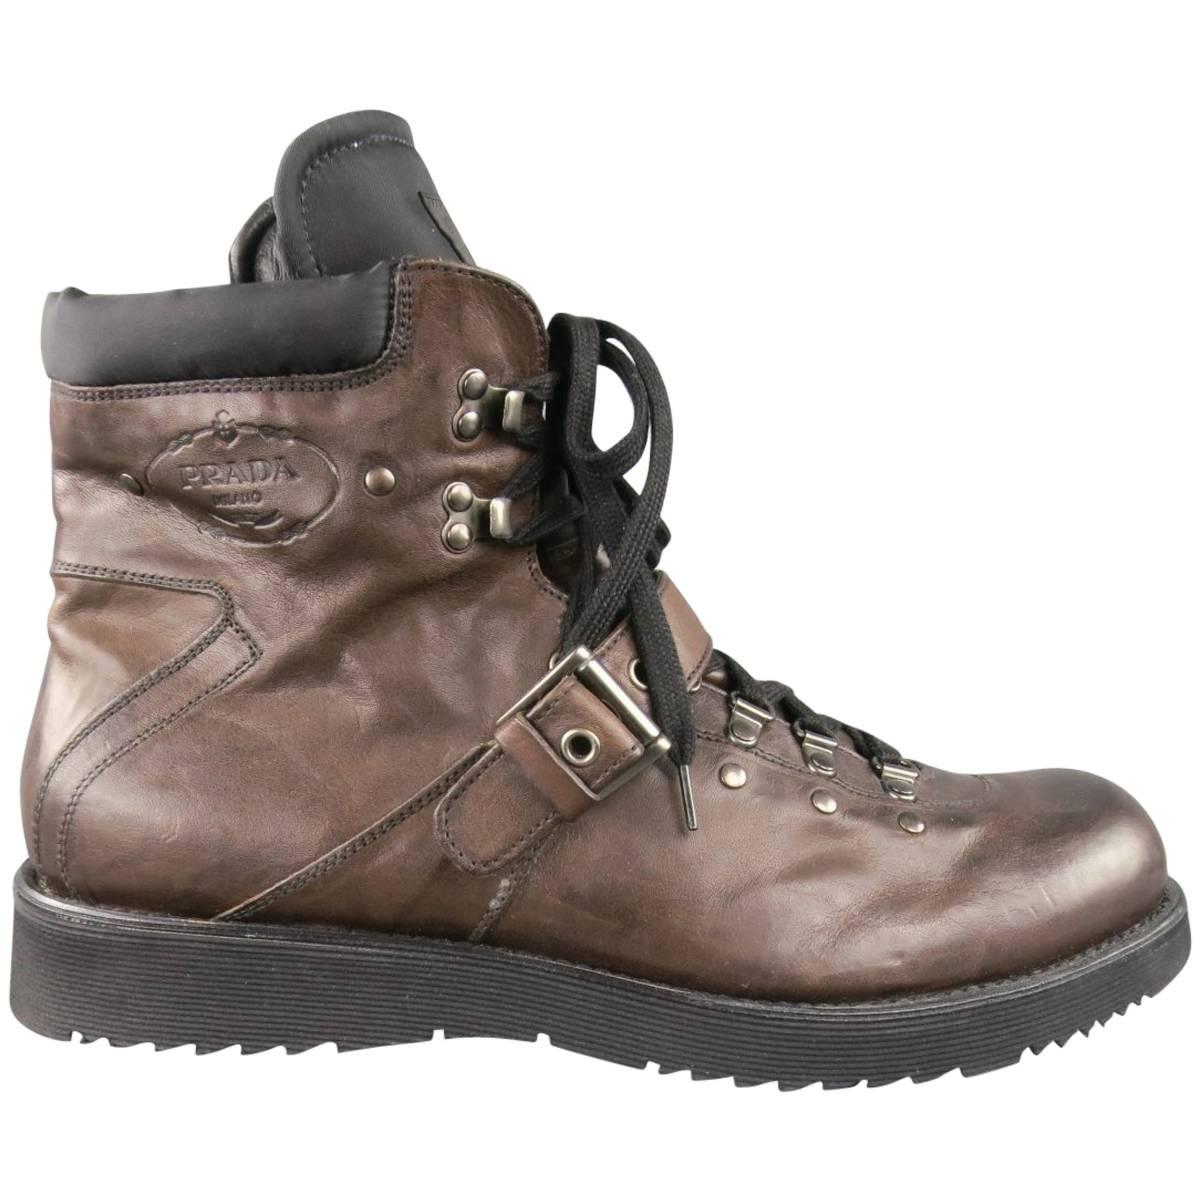 Men's PRADA Size 13 Brown Leather & Black Nylon Hiking Boots